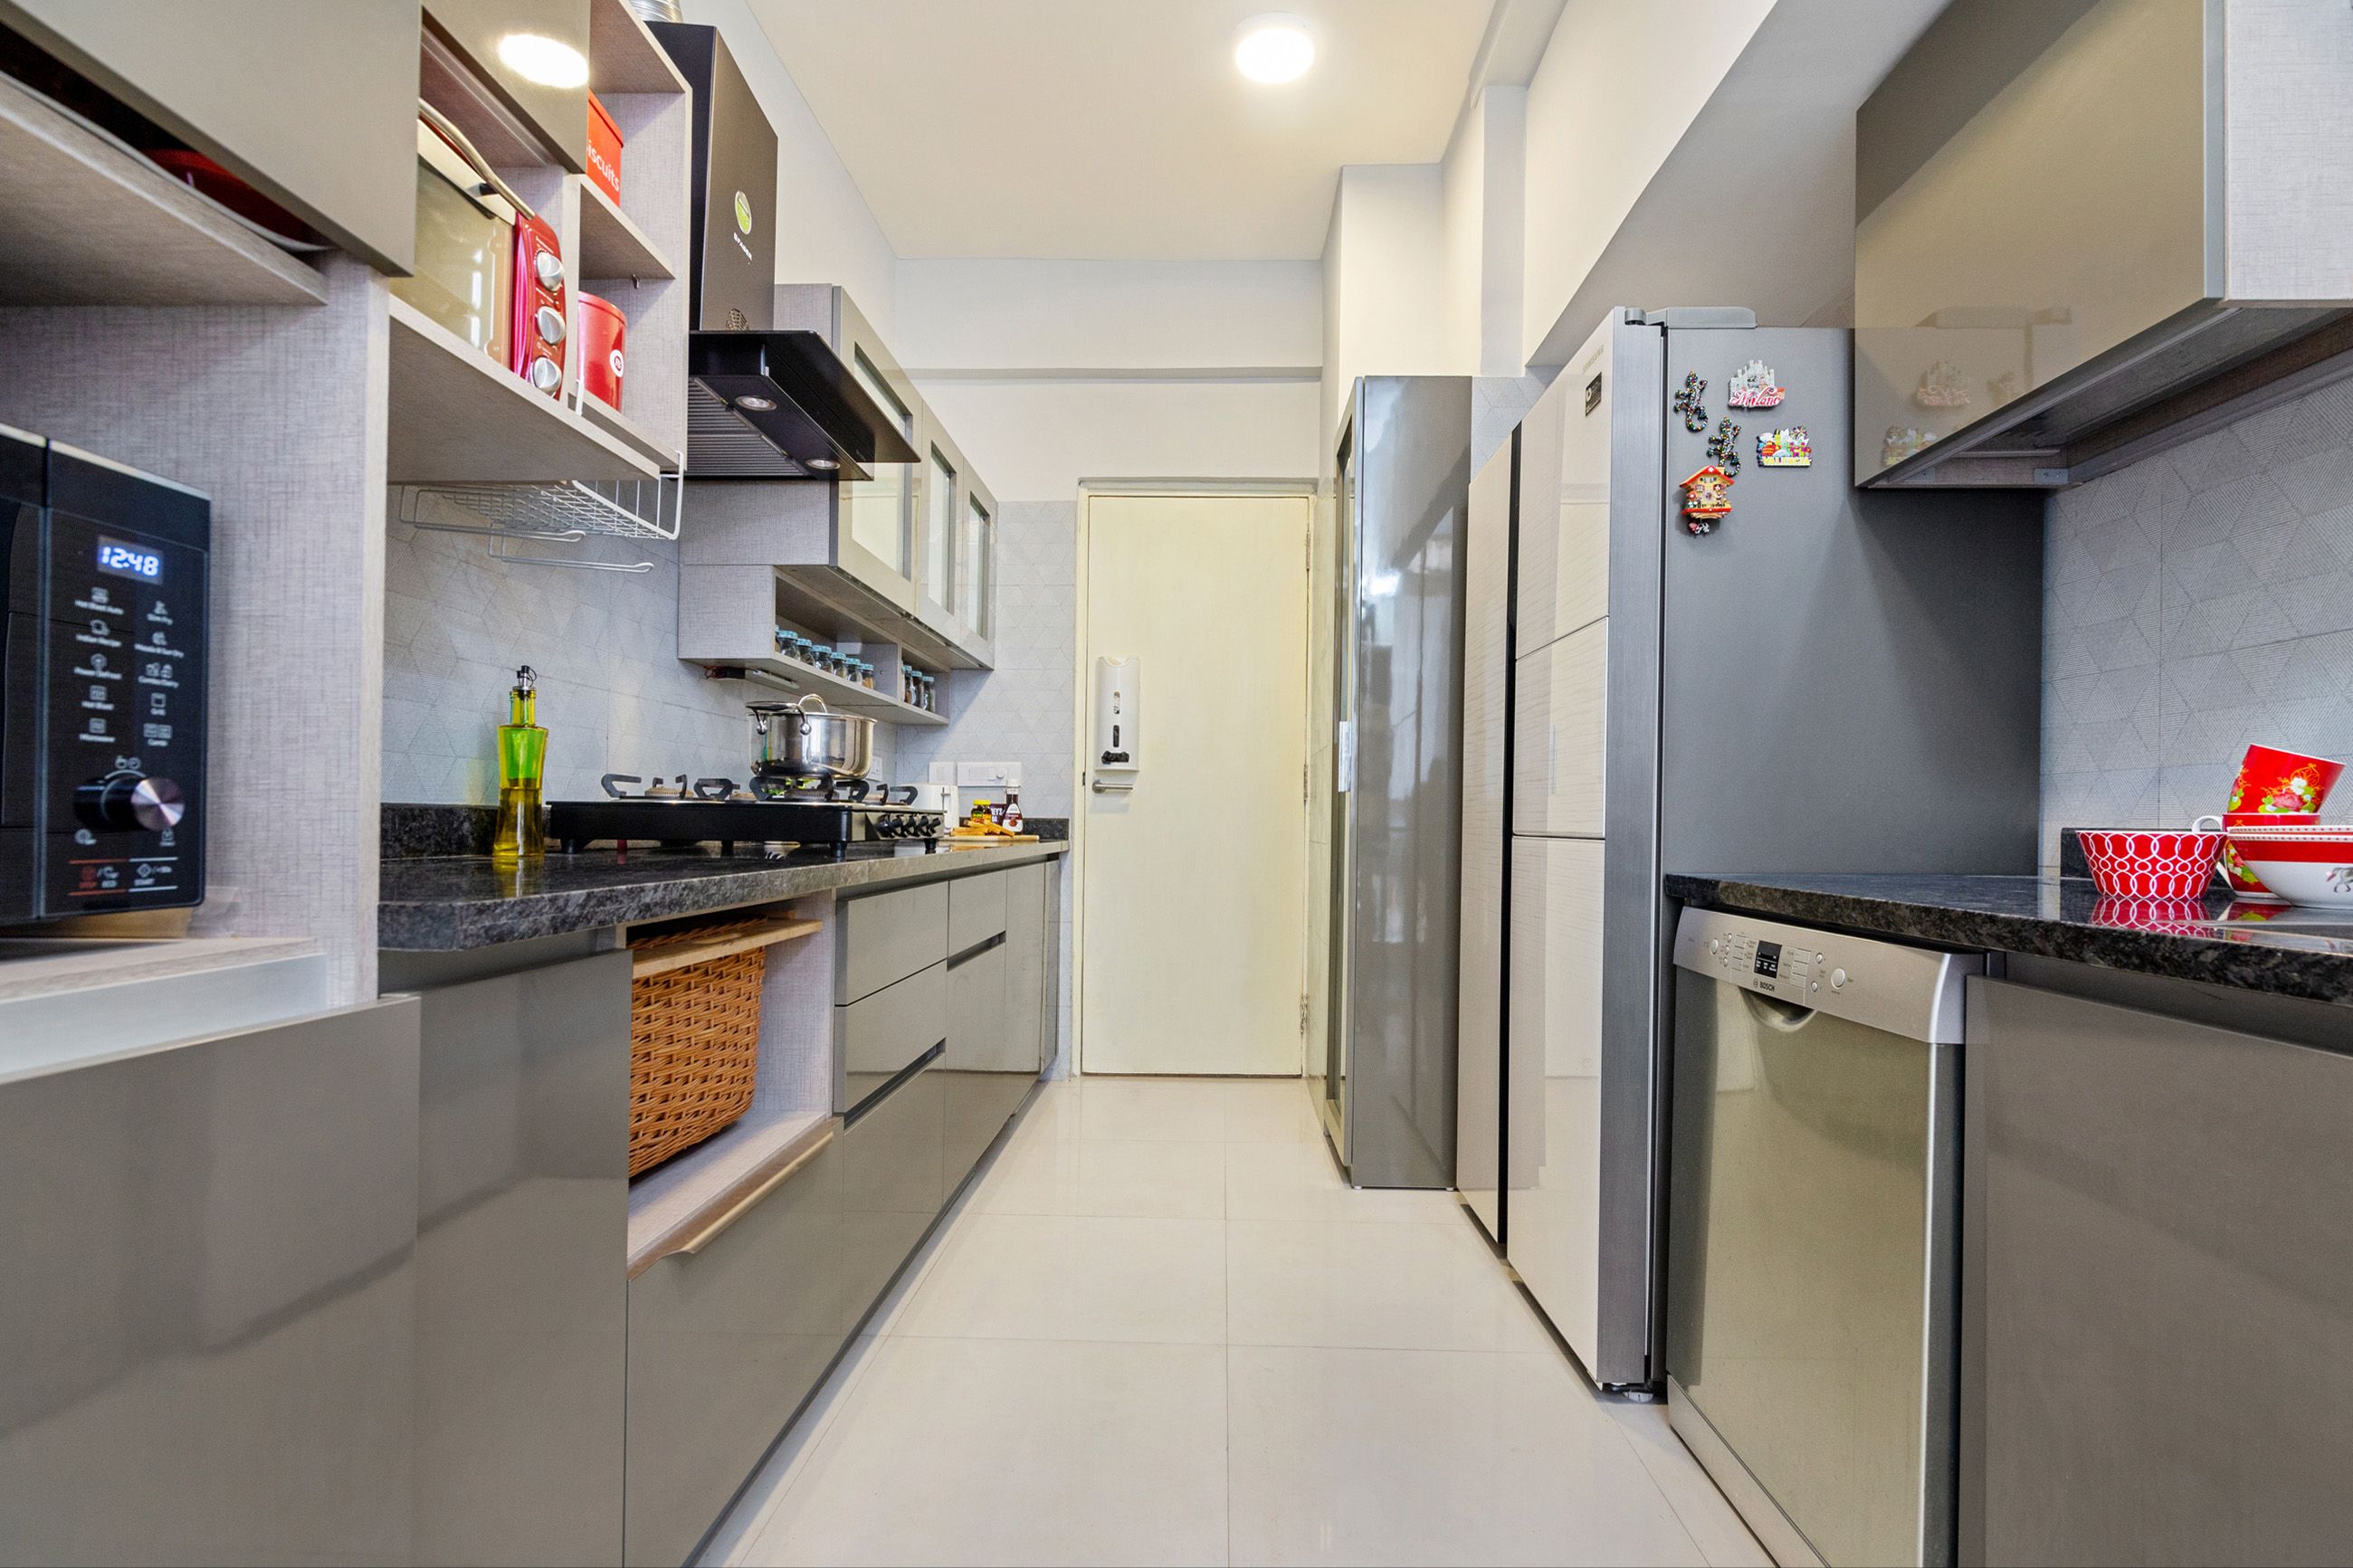 Slate Grey Modern Modular Parallel Kitchen Cabinet Design With Triangular Tile Backsplash In Kitchen